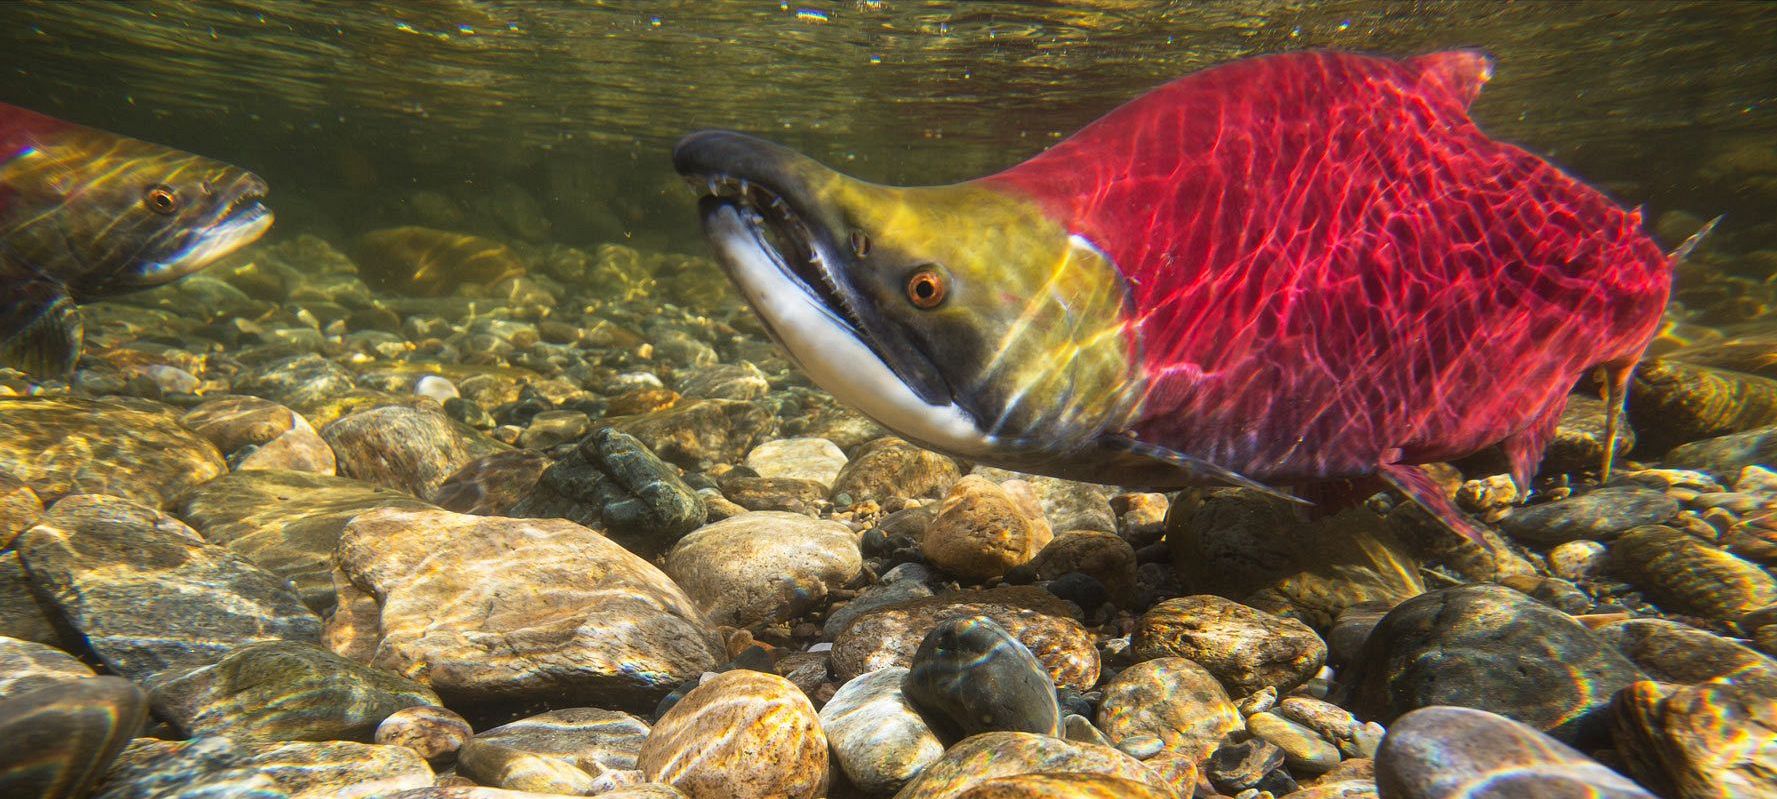 The Adams River Salmon Society AGM